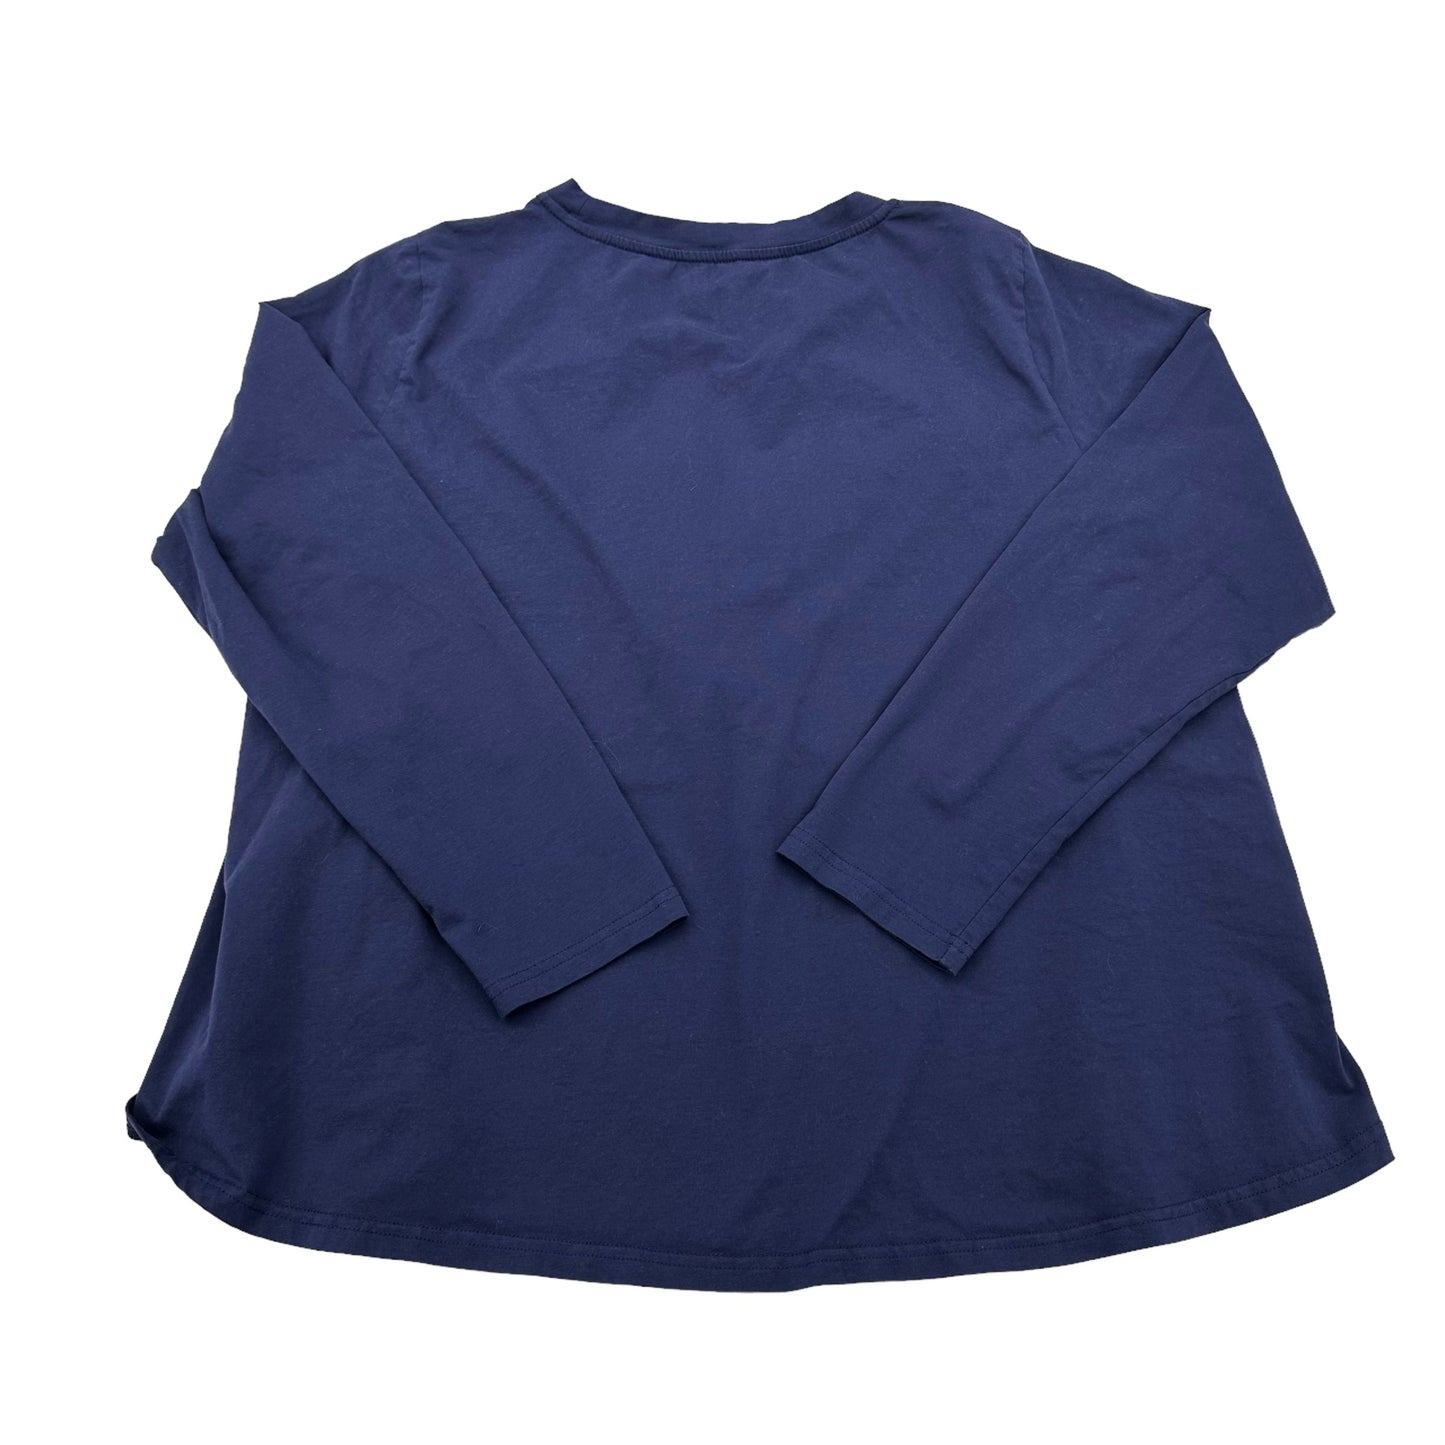 Nursing Bra By Clothes Mentor  Size: 3x